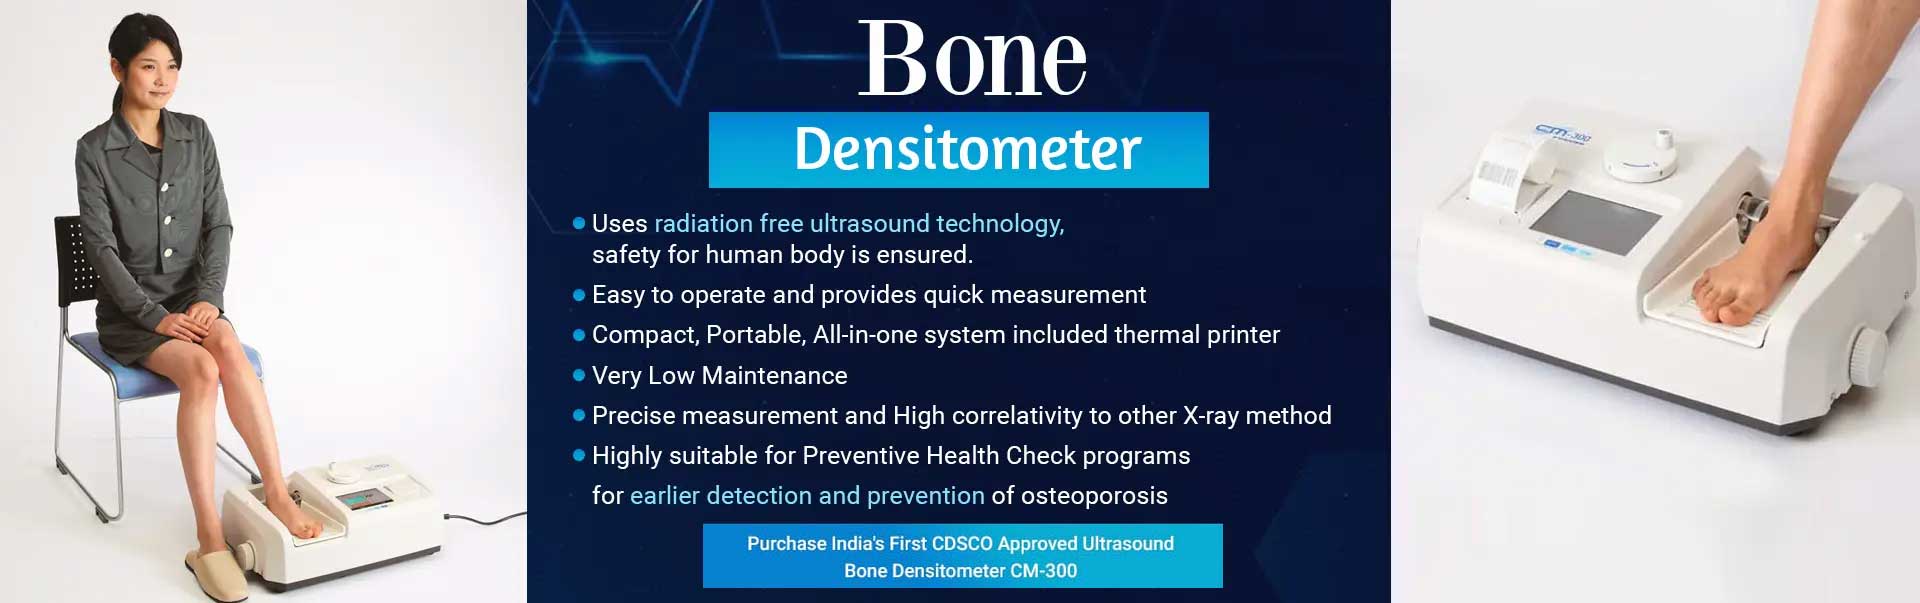 Bone Densitometer Manufacturers in Pune